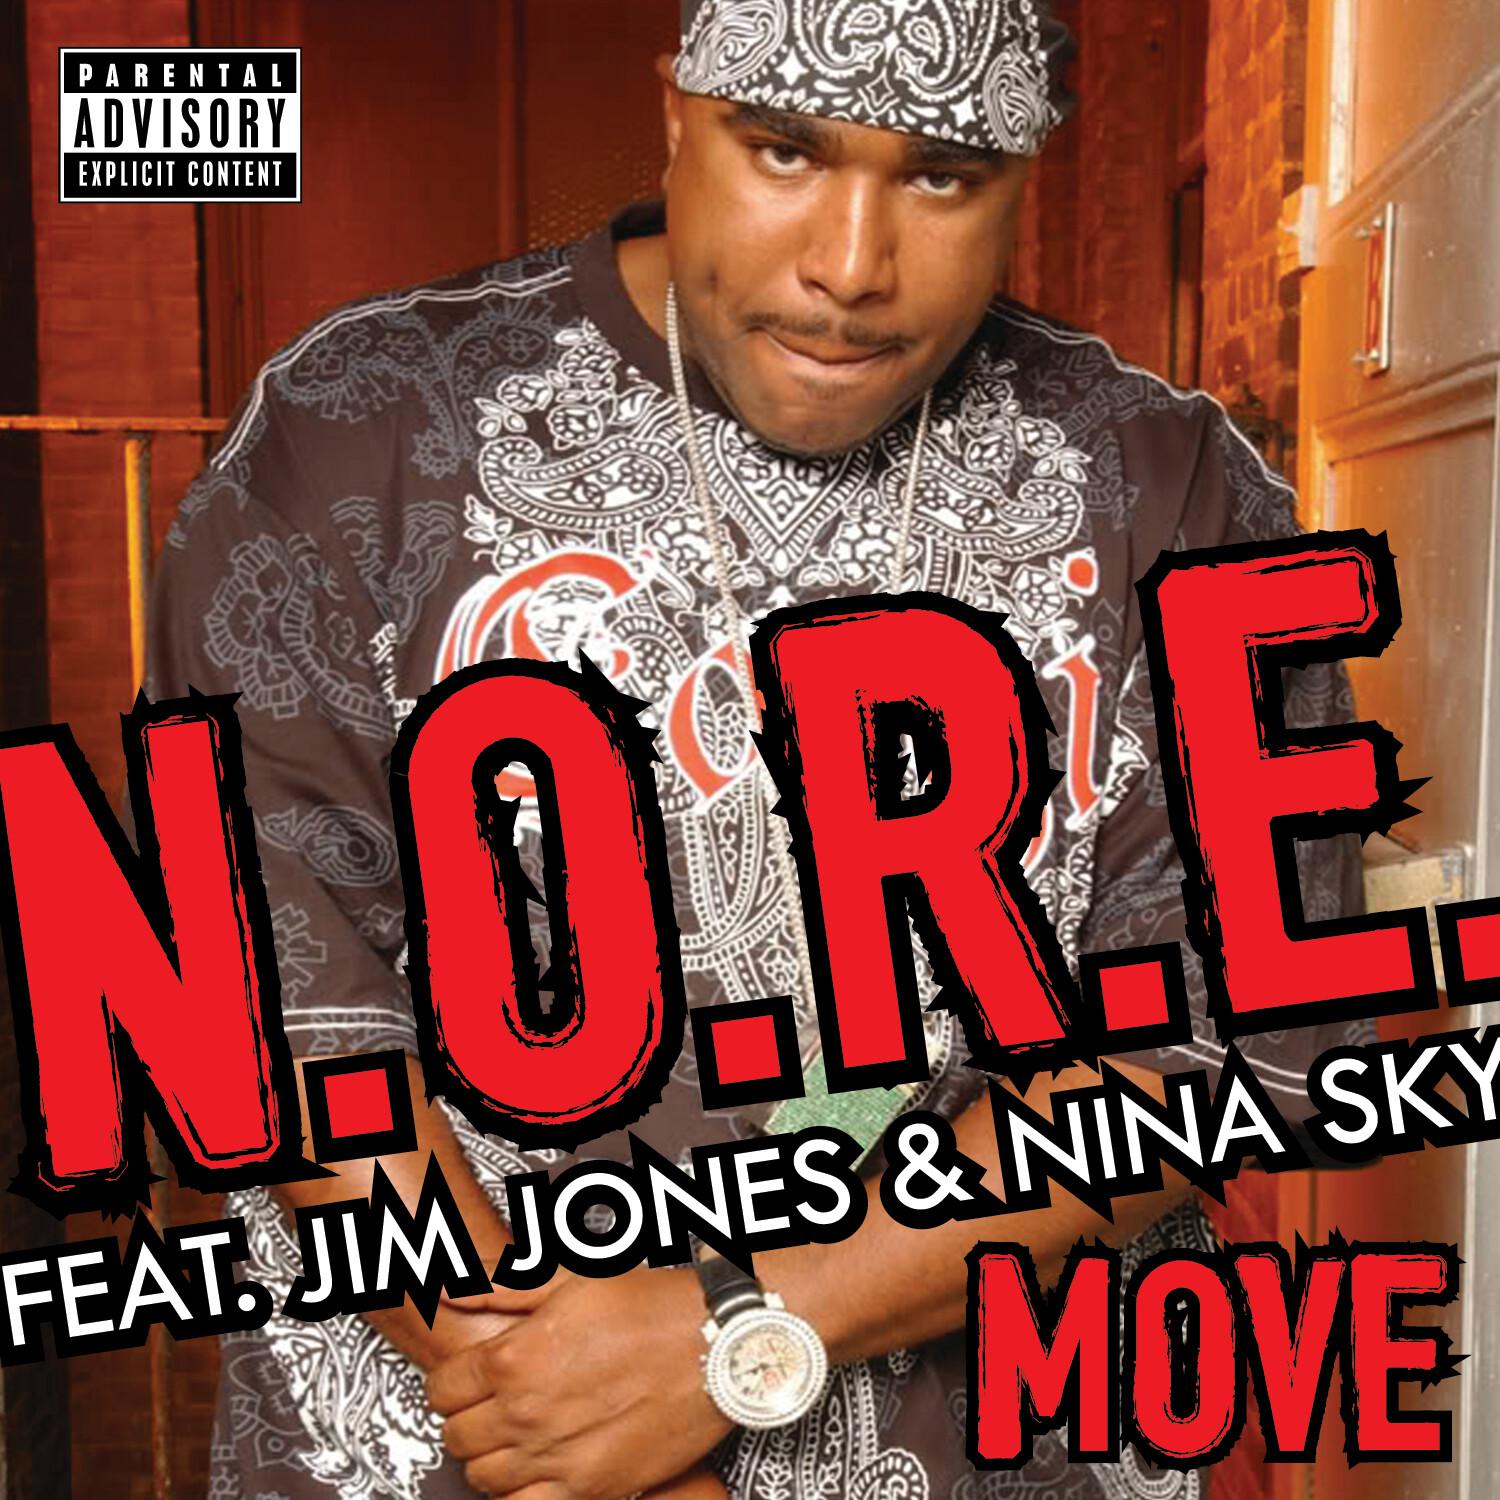 Move (feat. Jim Jones & Nina Sky) - Single